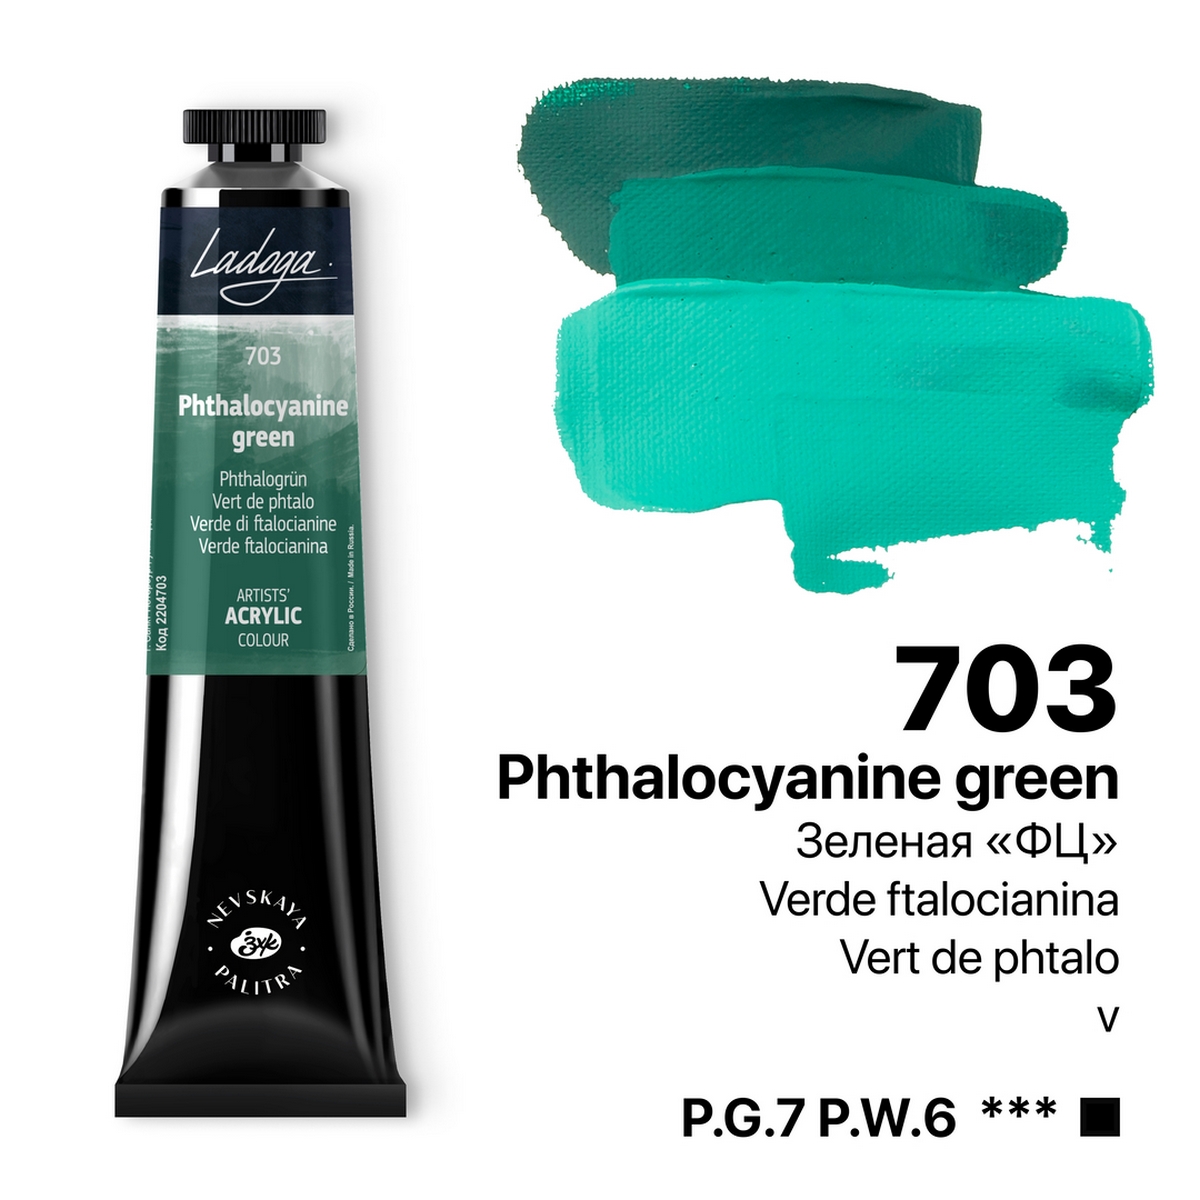 Acrylic colour Ladoga, Phthalocyanine Green, № 703